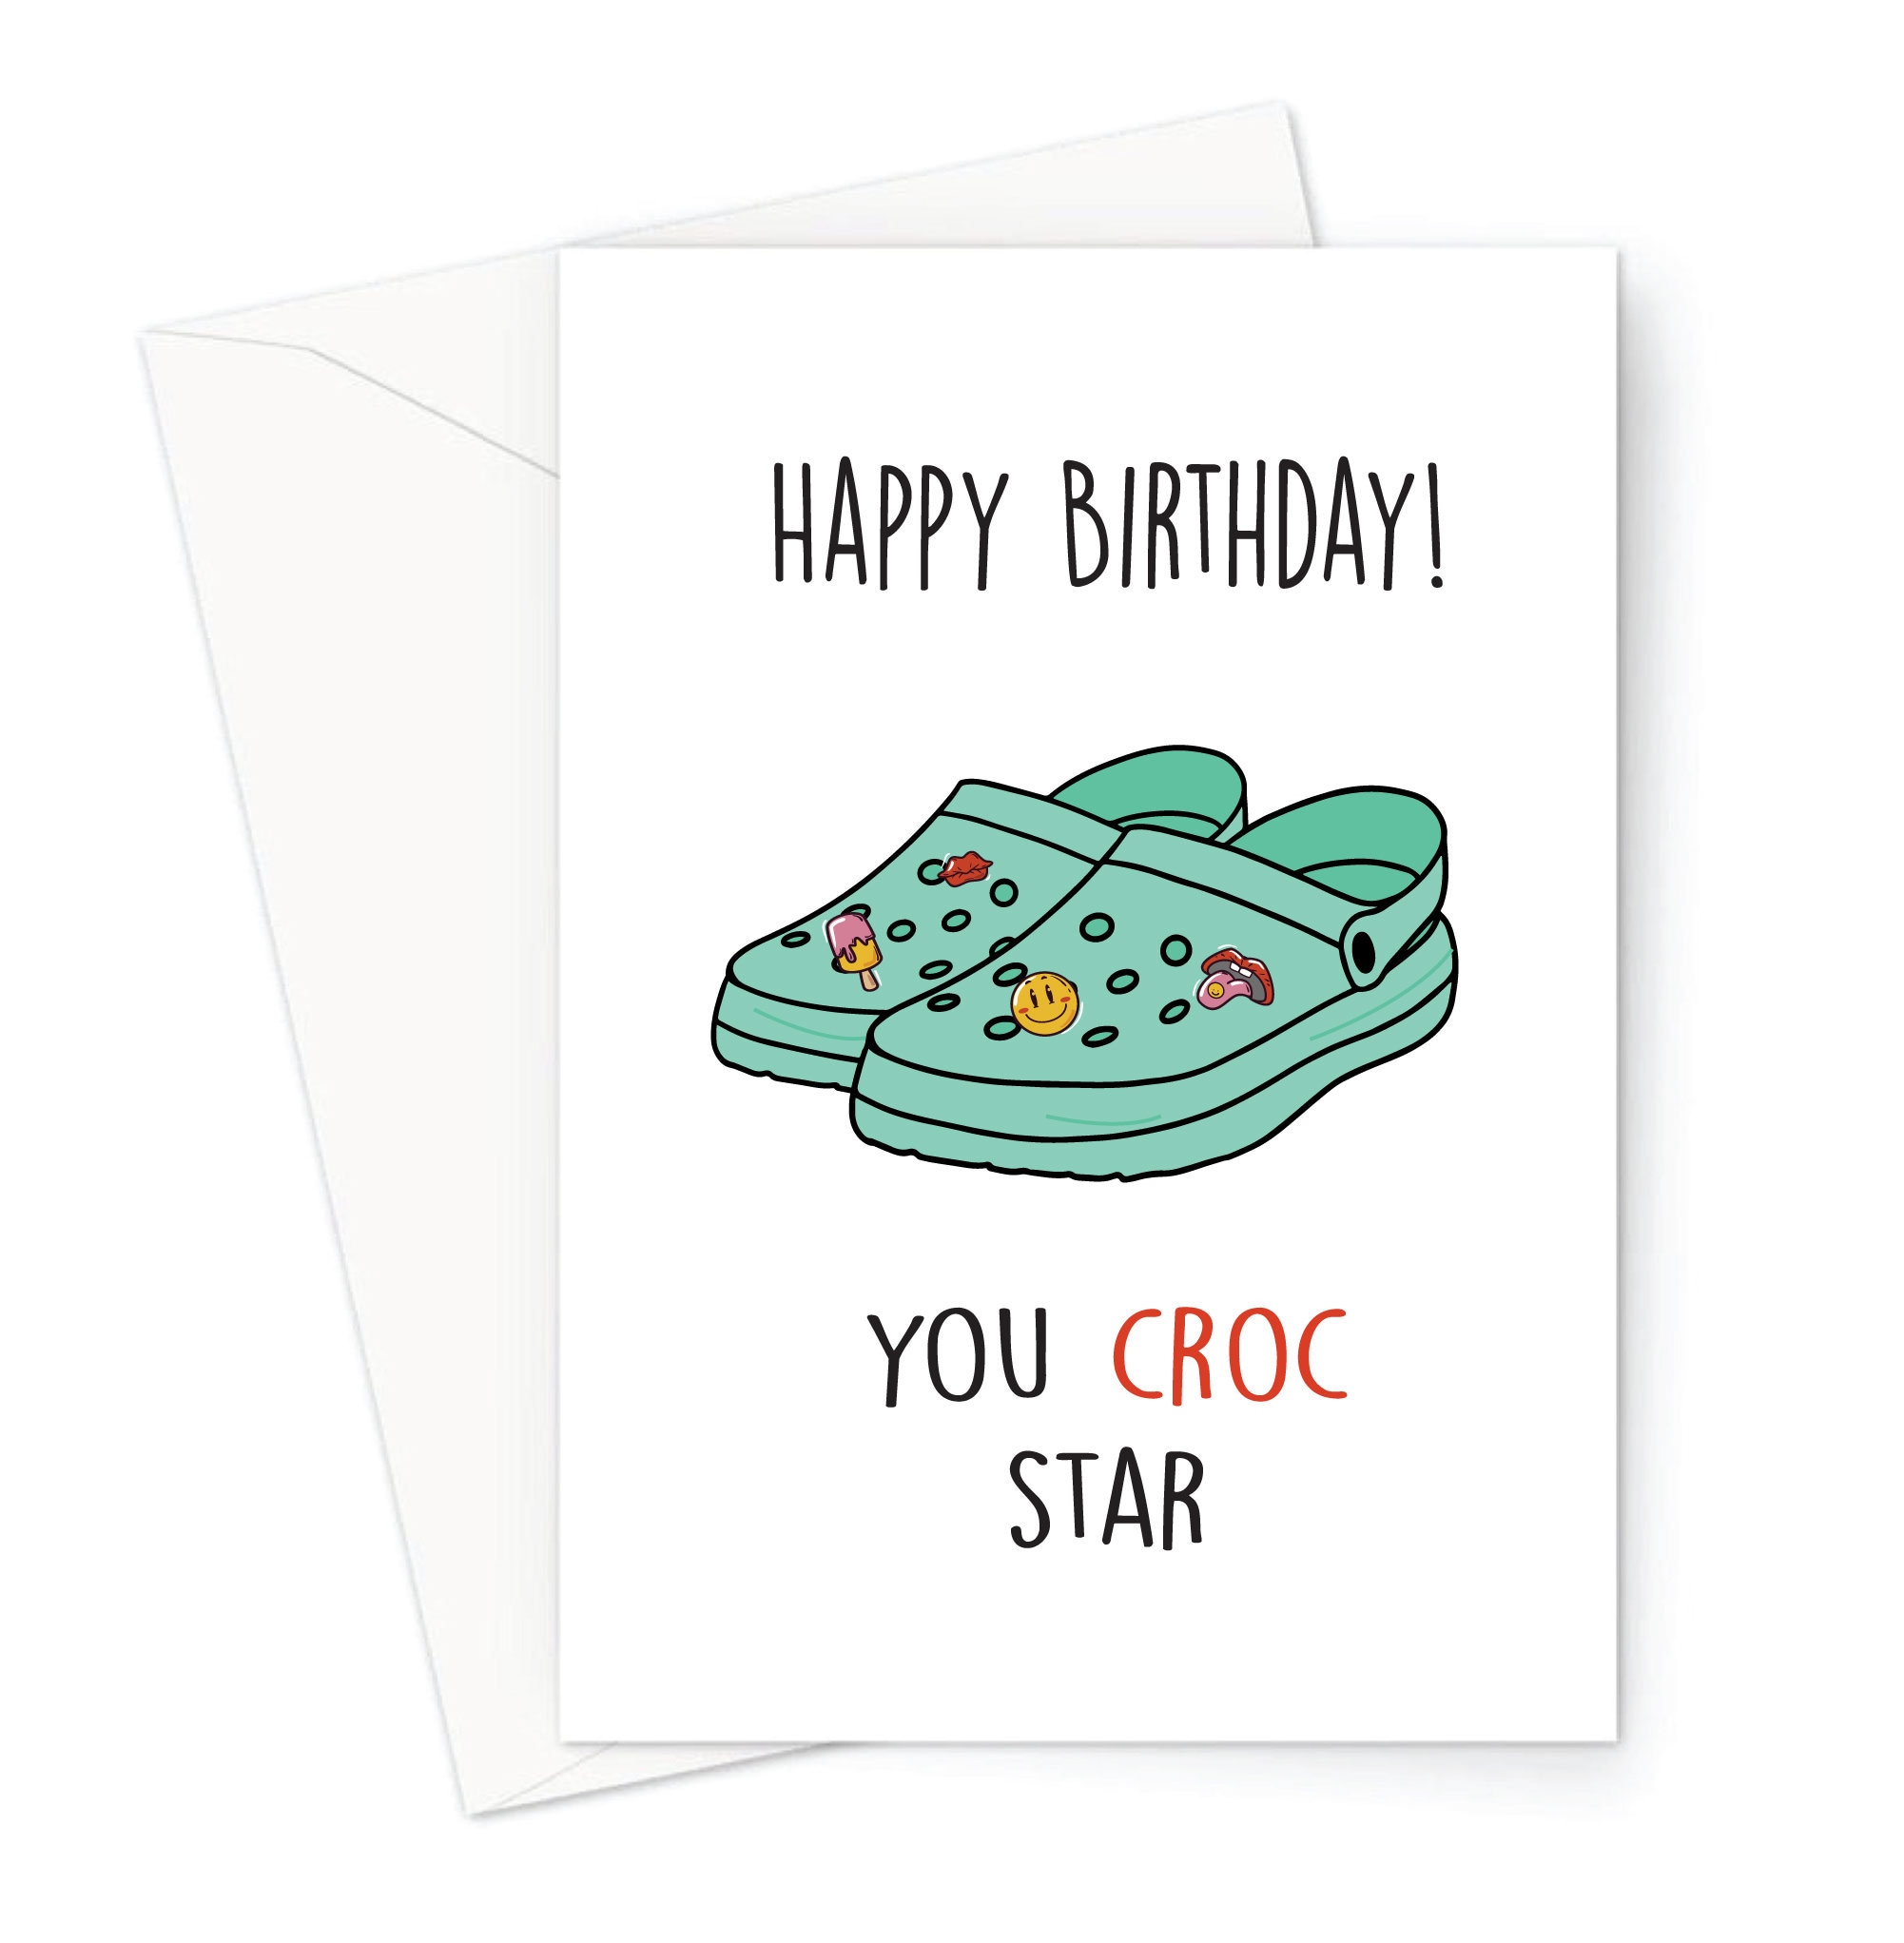 Happy Birthday Crocs Star Croc Shoes-cheeky Birthday Card - Etsy